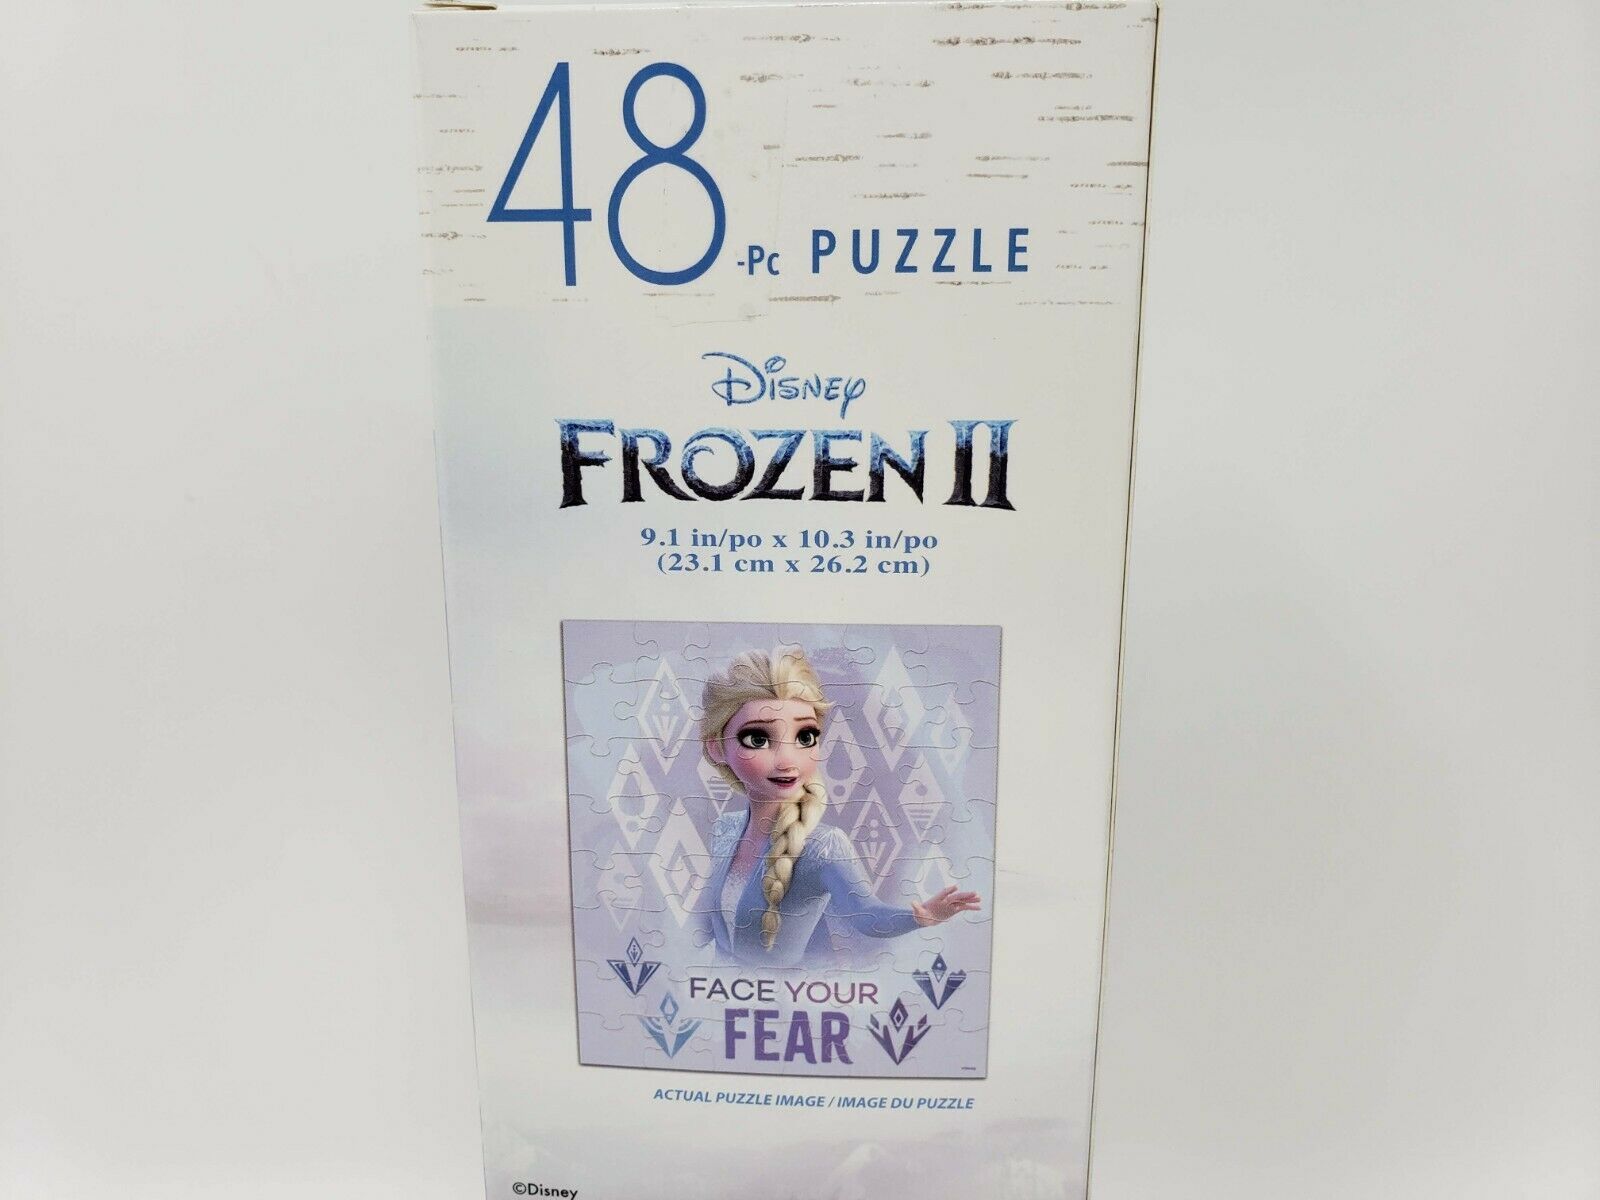 Disney Frozen II 48 Pc Jigsaw Puzzle - New - Elsa Face Your Fear